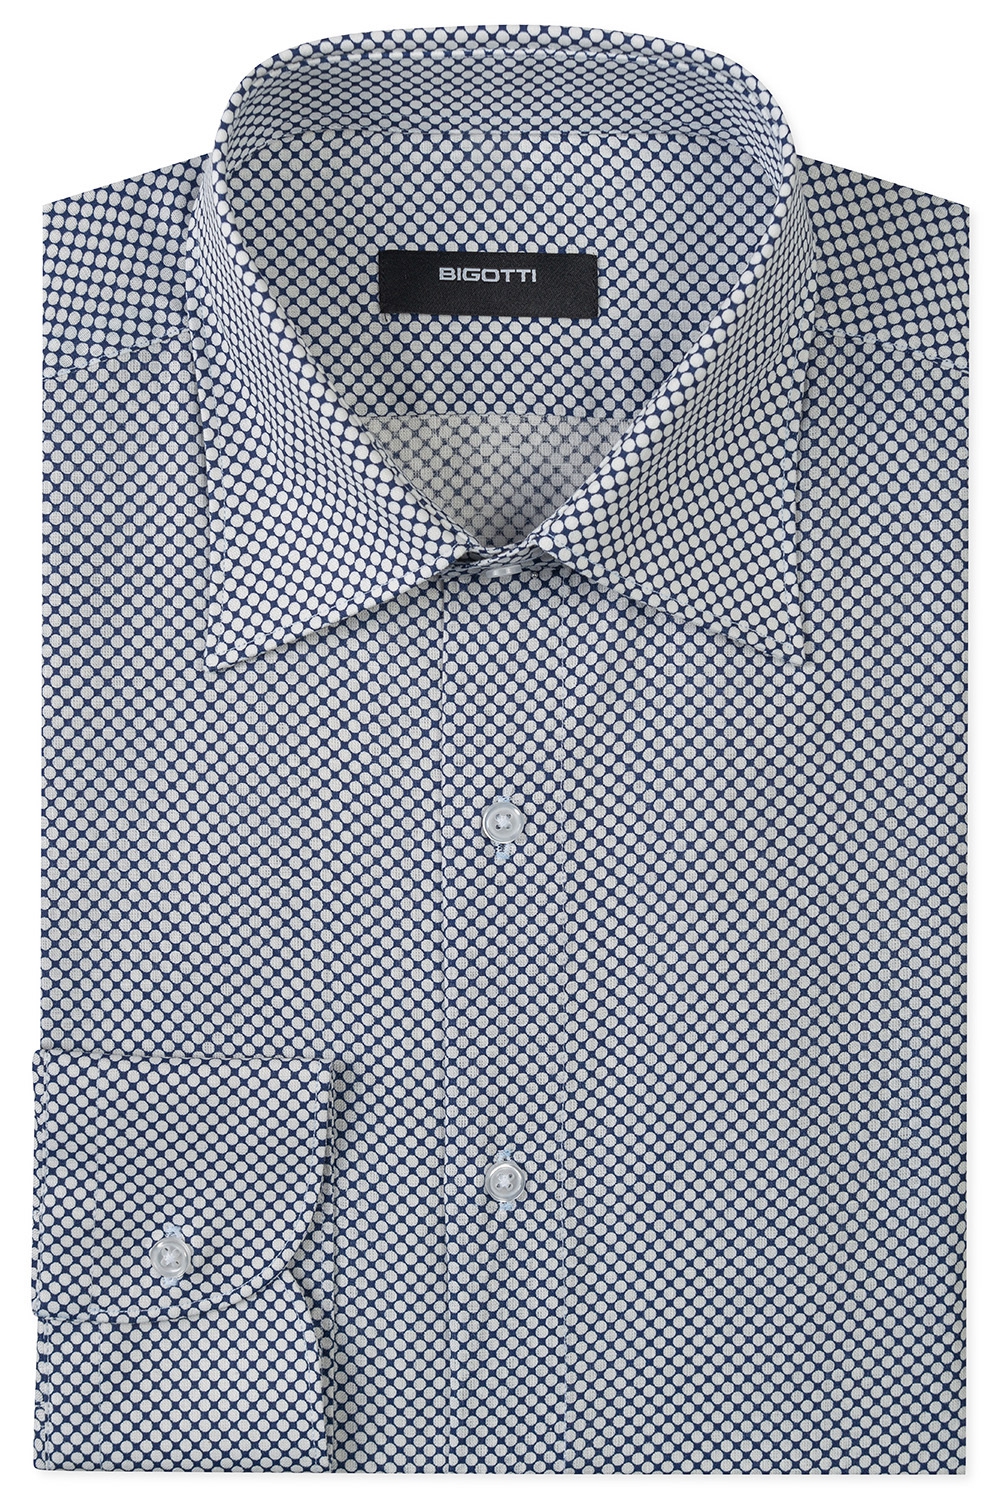 Camasa bigotti slim alba print geometric 0